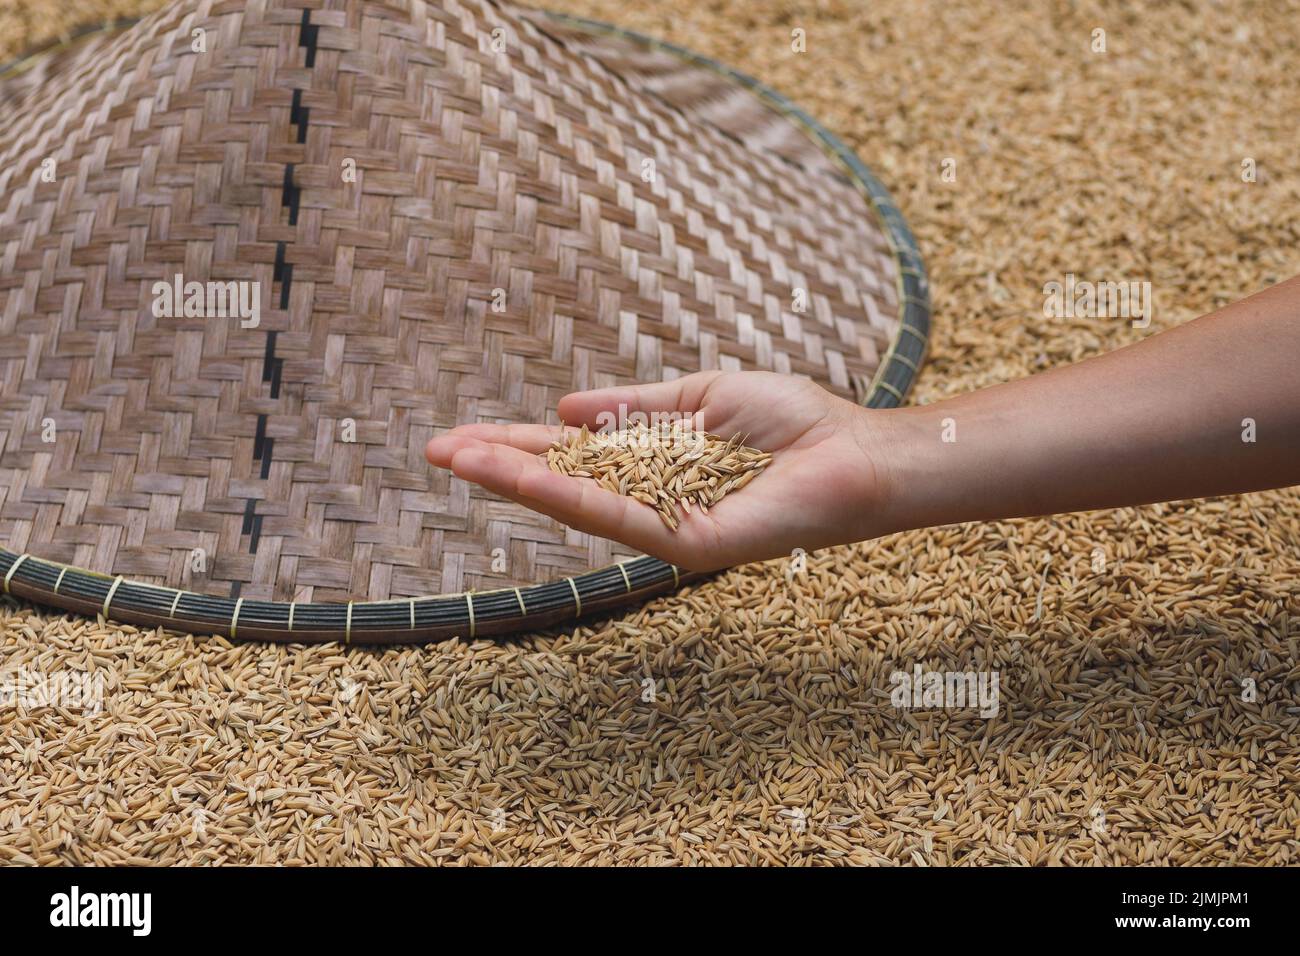 Harvest of ripe rice grains in female hand Stock Photo